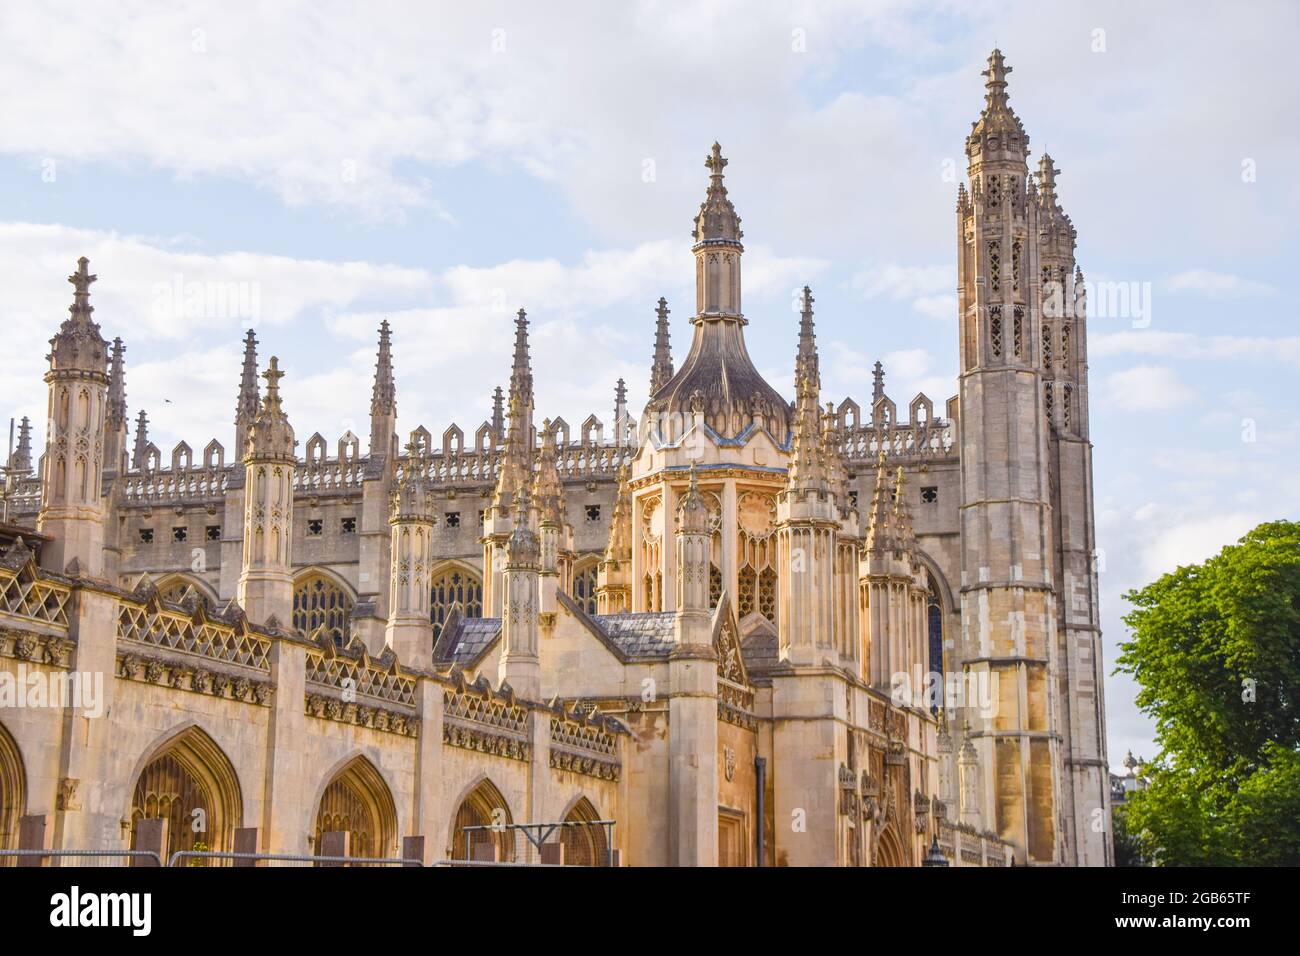 King's College exterior detail, University of Cambridge, United Kingdom Stock Photo